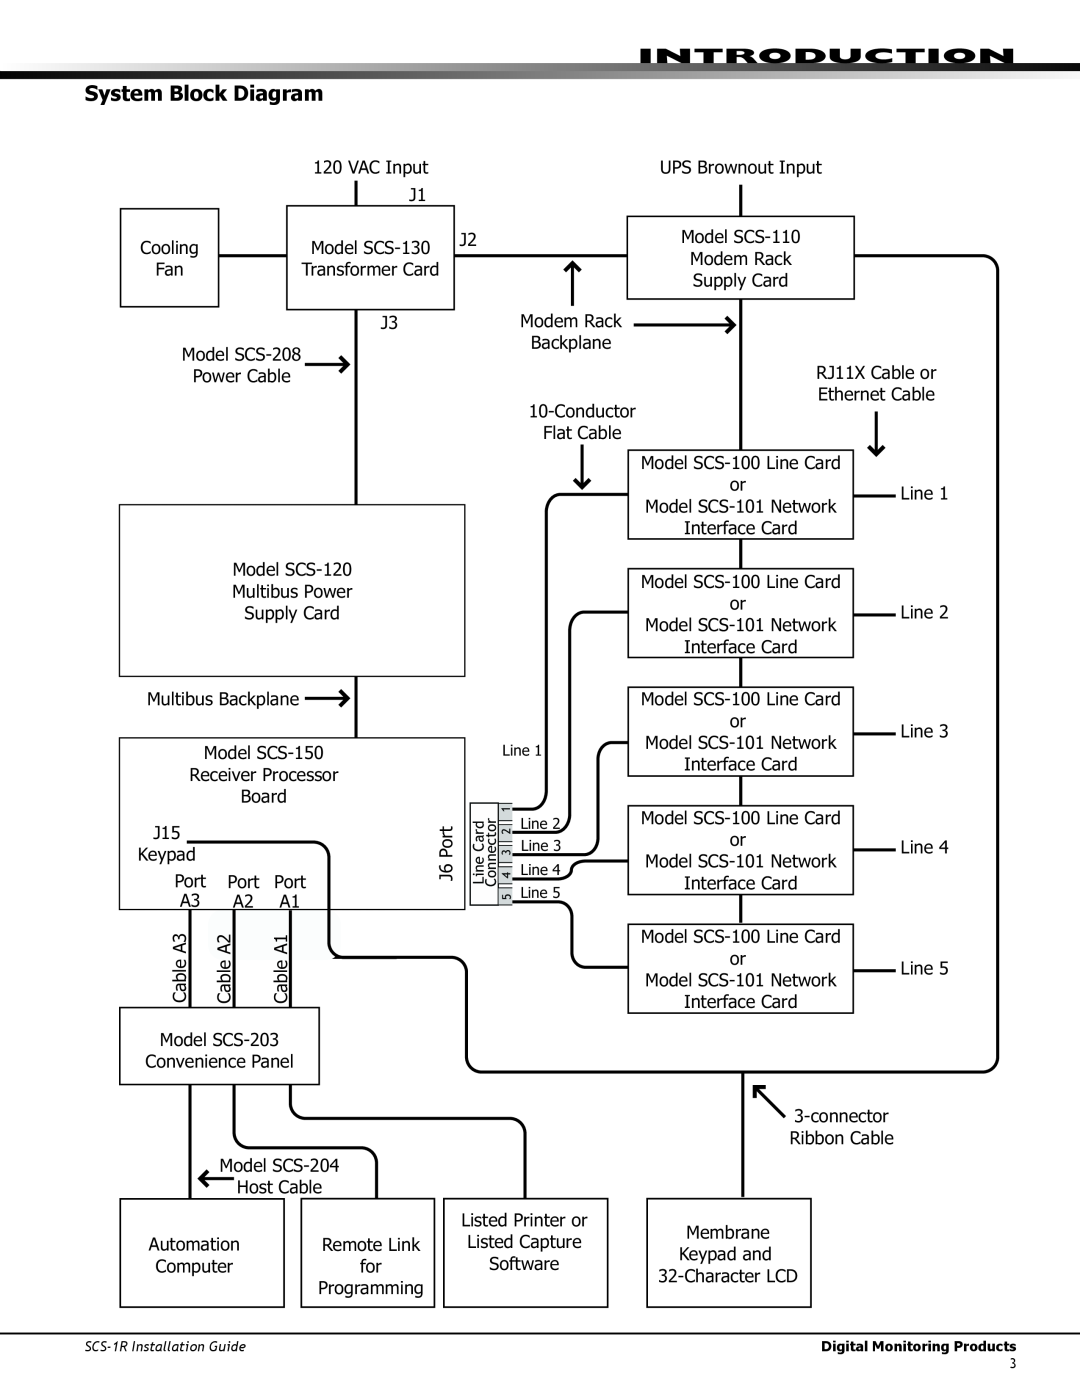 DMP Electronics SCS-1R manual System Block Diagram, Introduction 